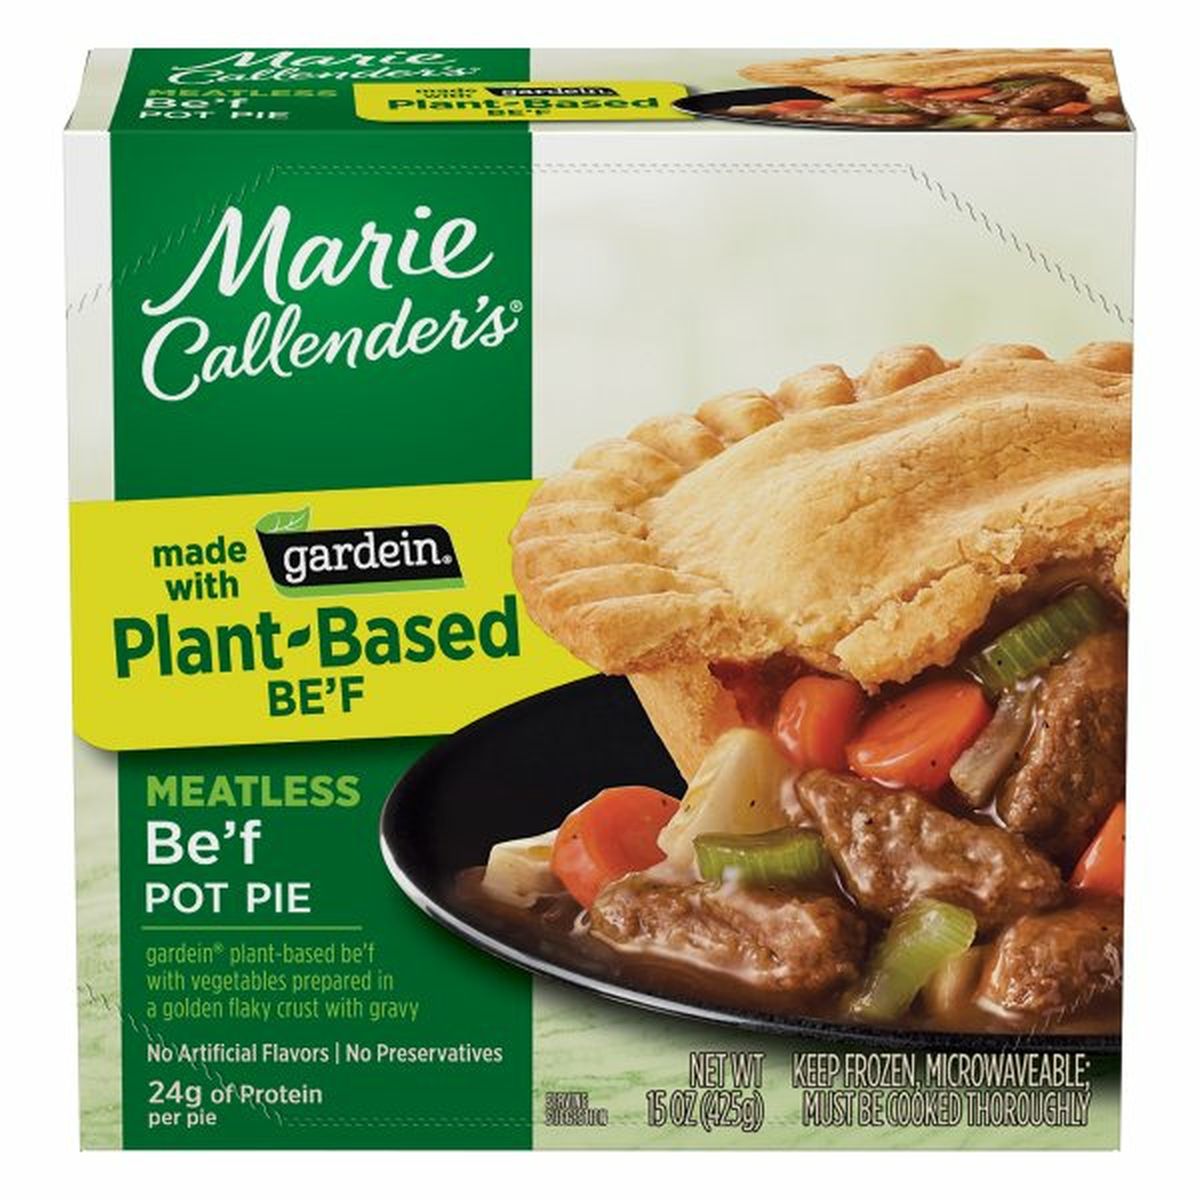 Calories in Marie Callender's Pot Pie, Be'f, Meatless